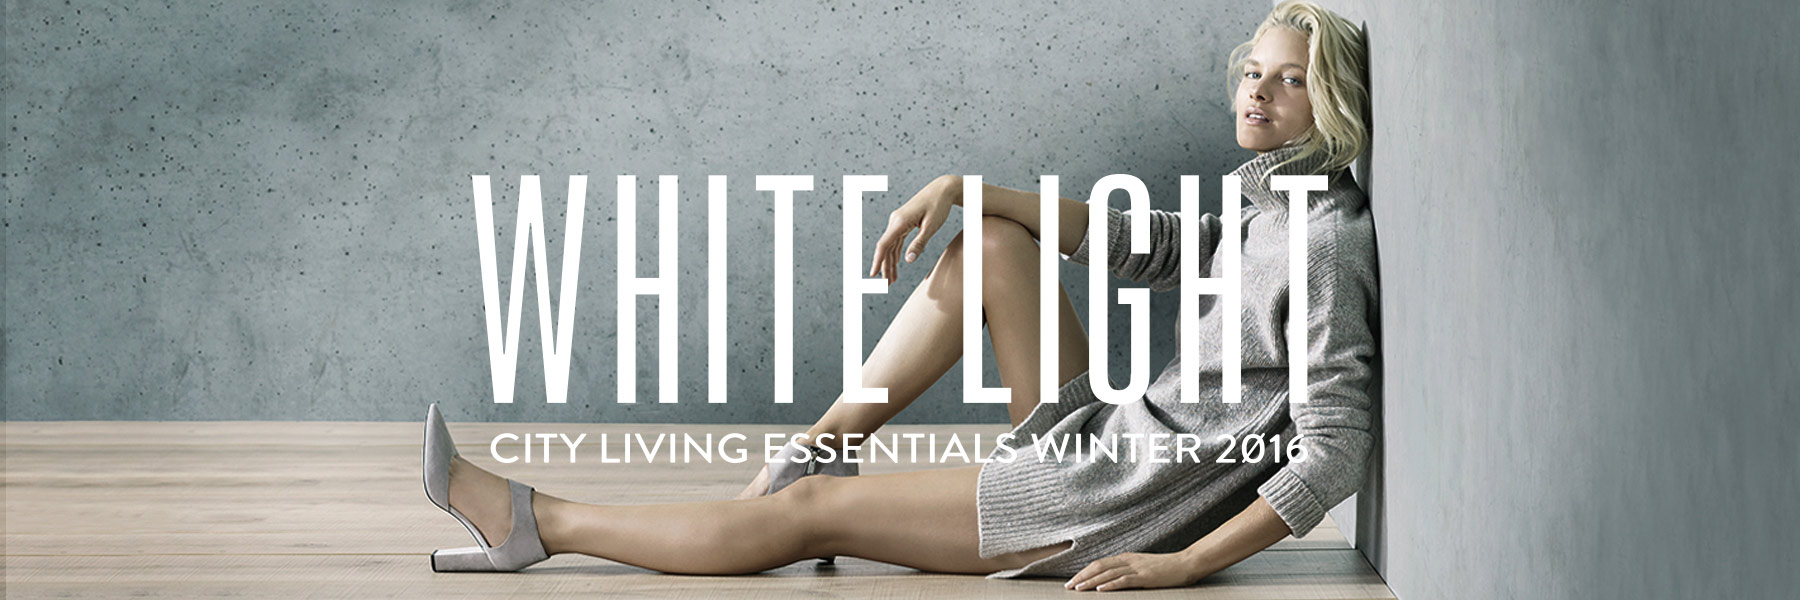 Wittner Winter 2016 Advertising Campaign - White light positioning